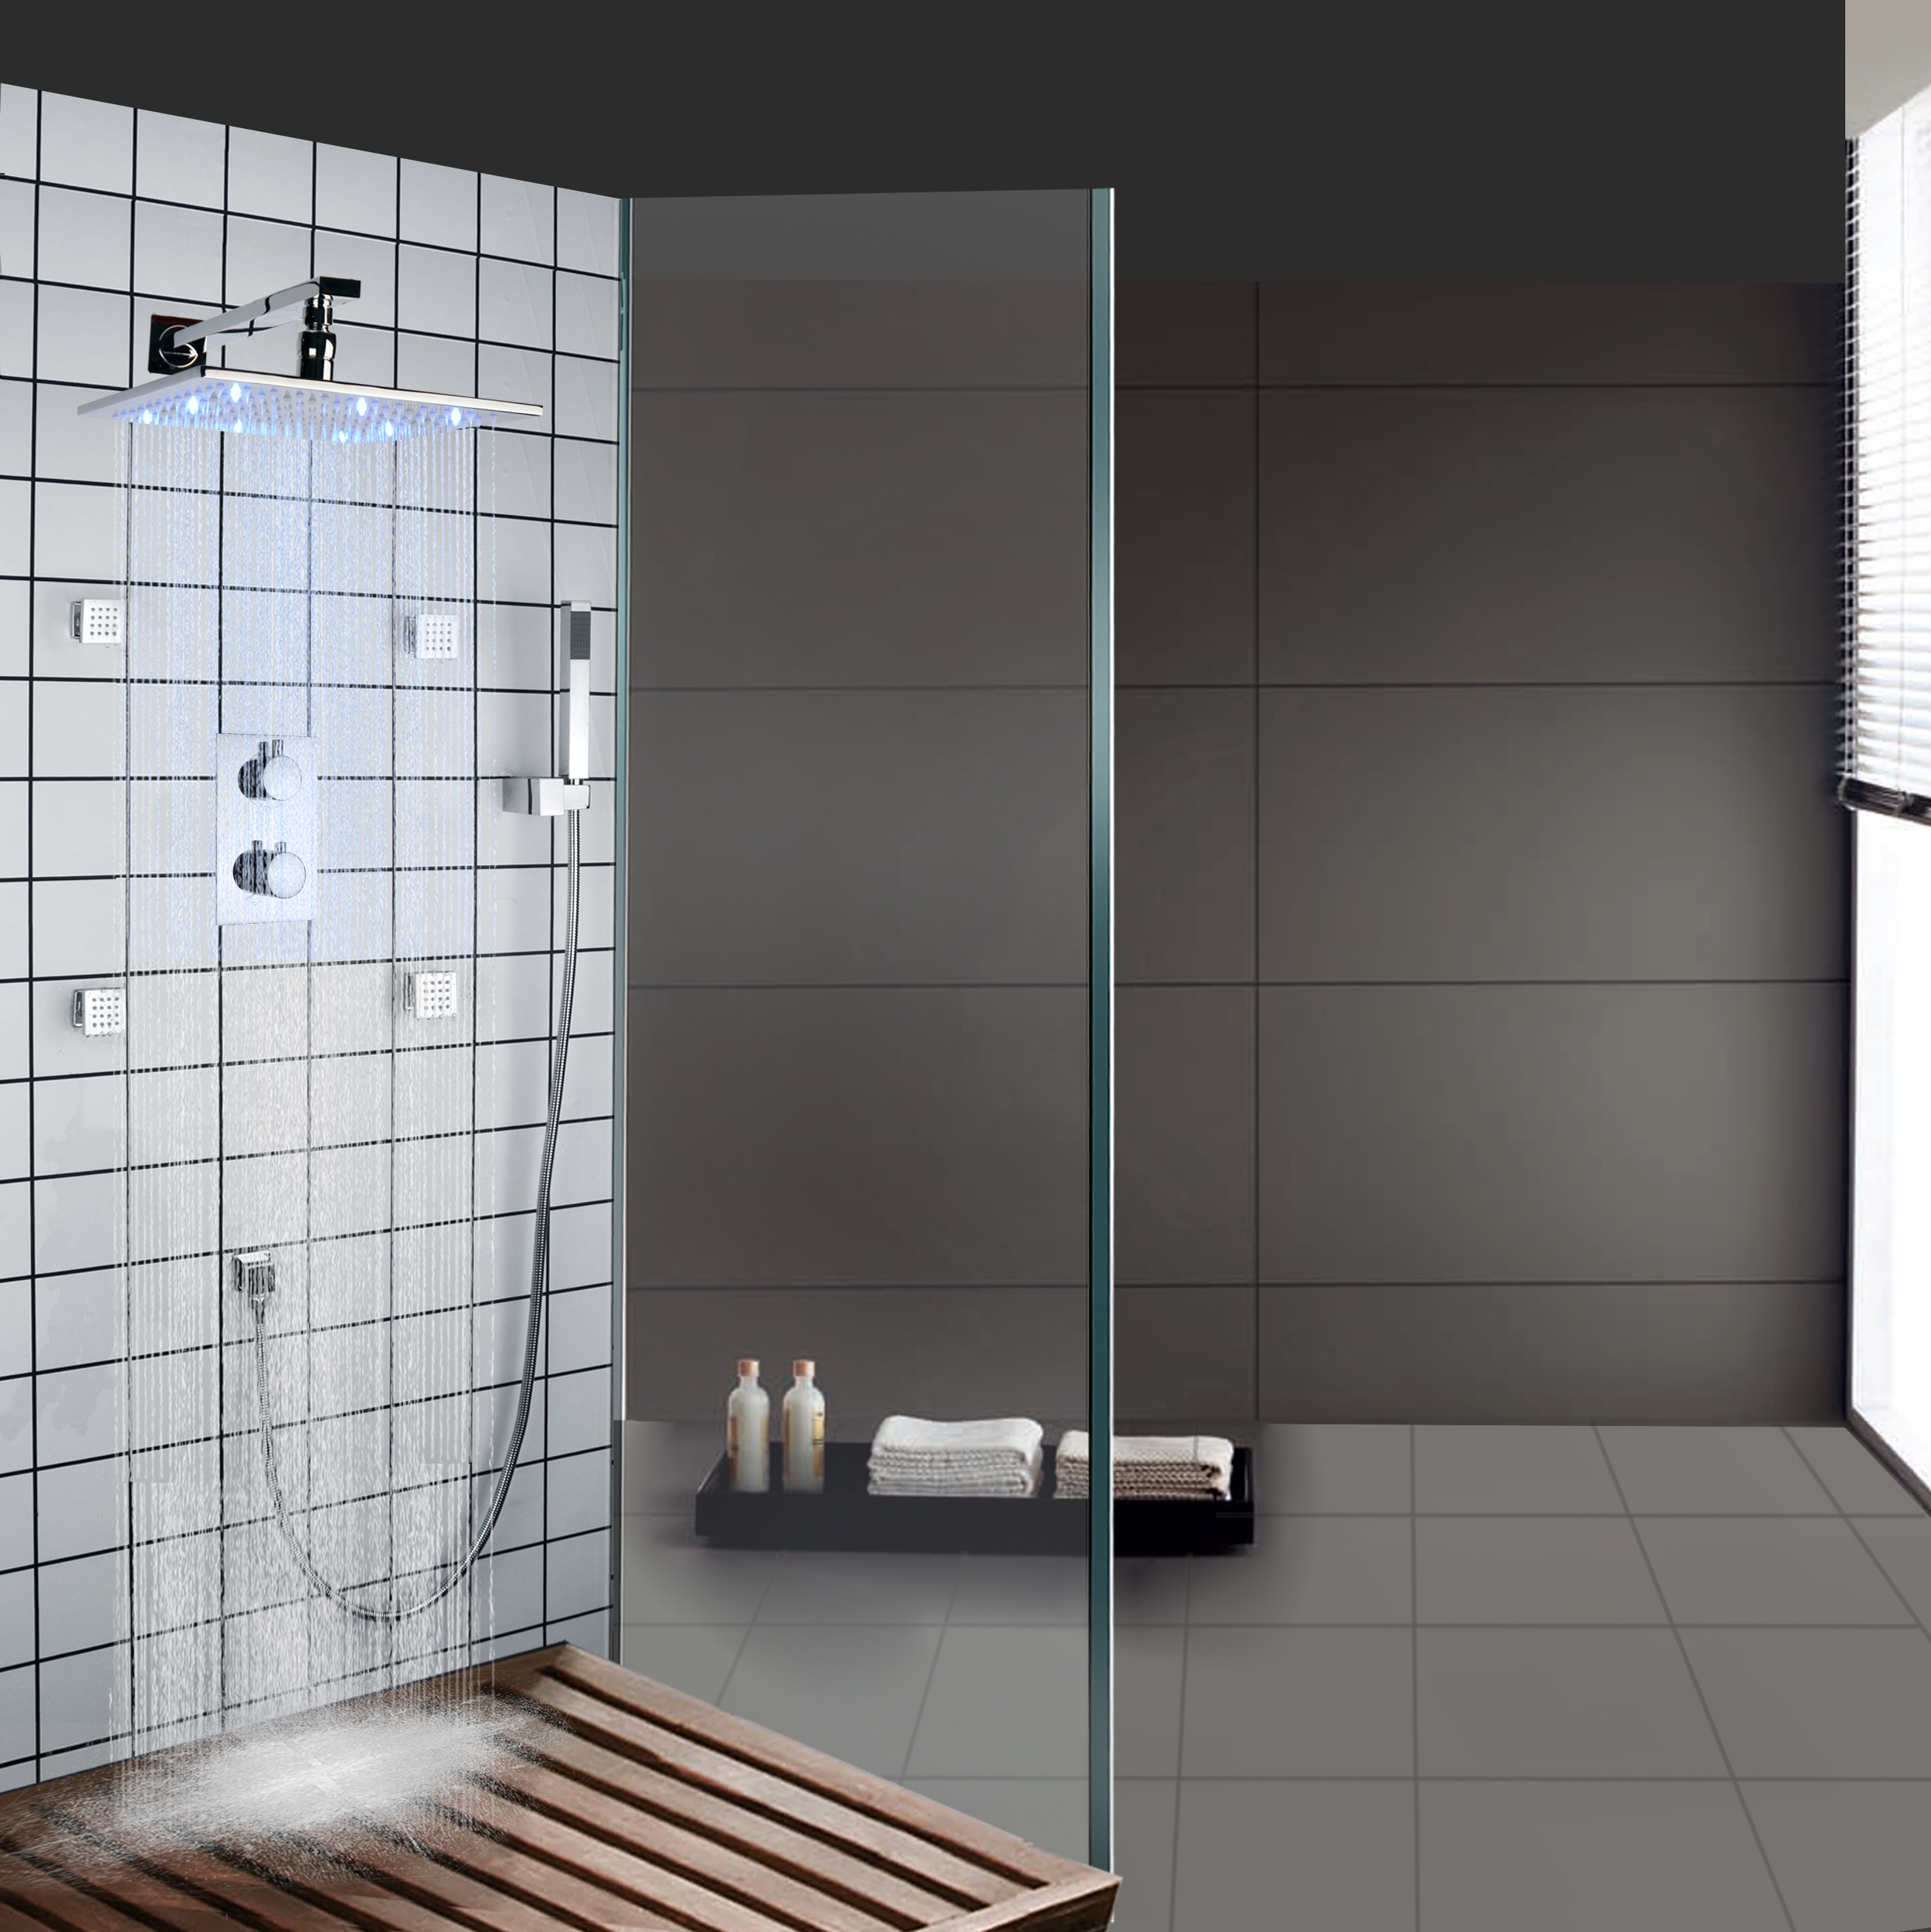 Chrome Polished Bathroom Furniture Shower System Panel Rainfall Set Of Nozzles Handheld